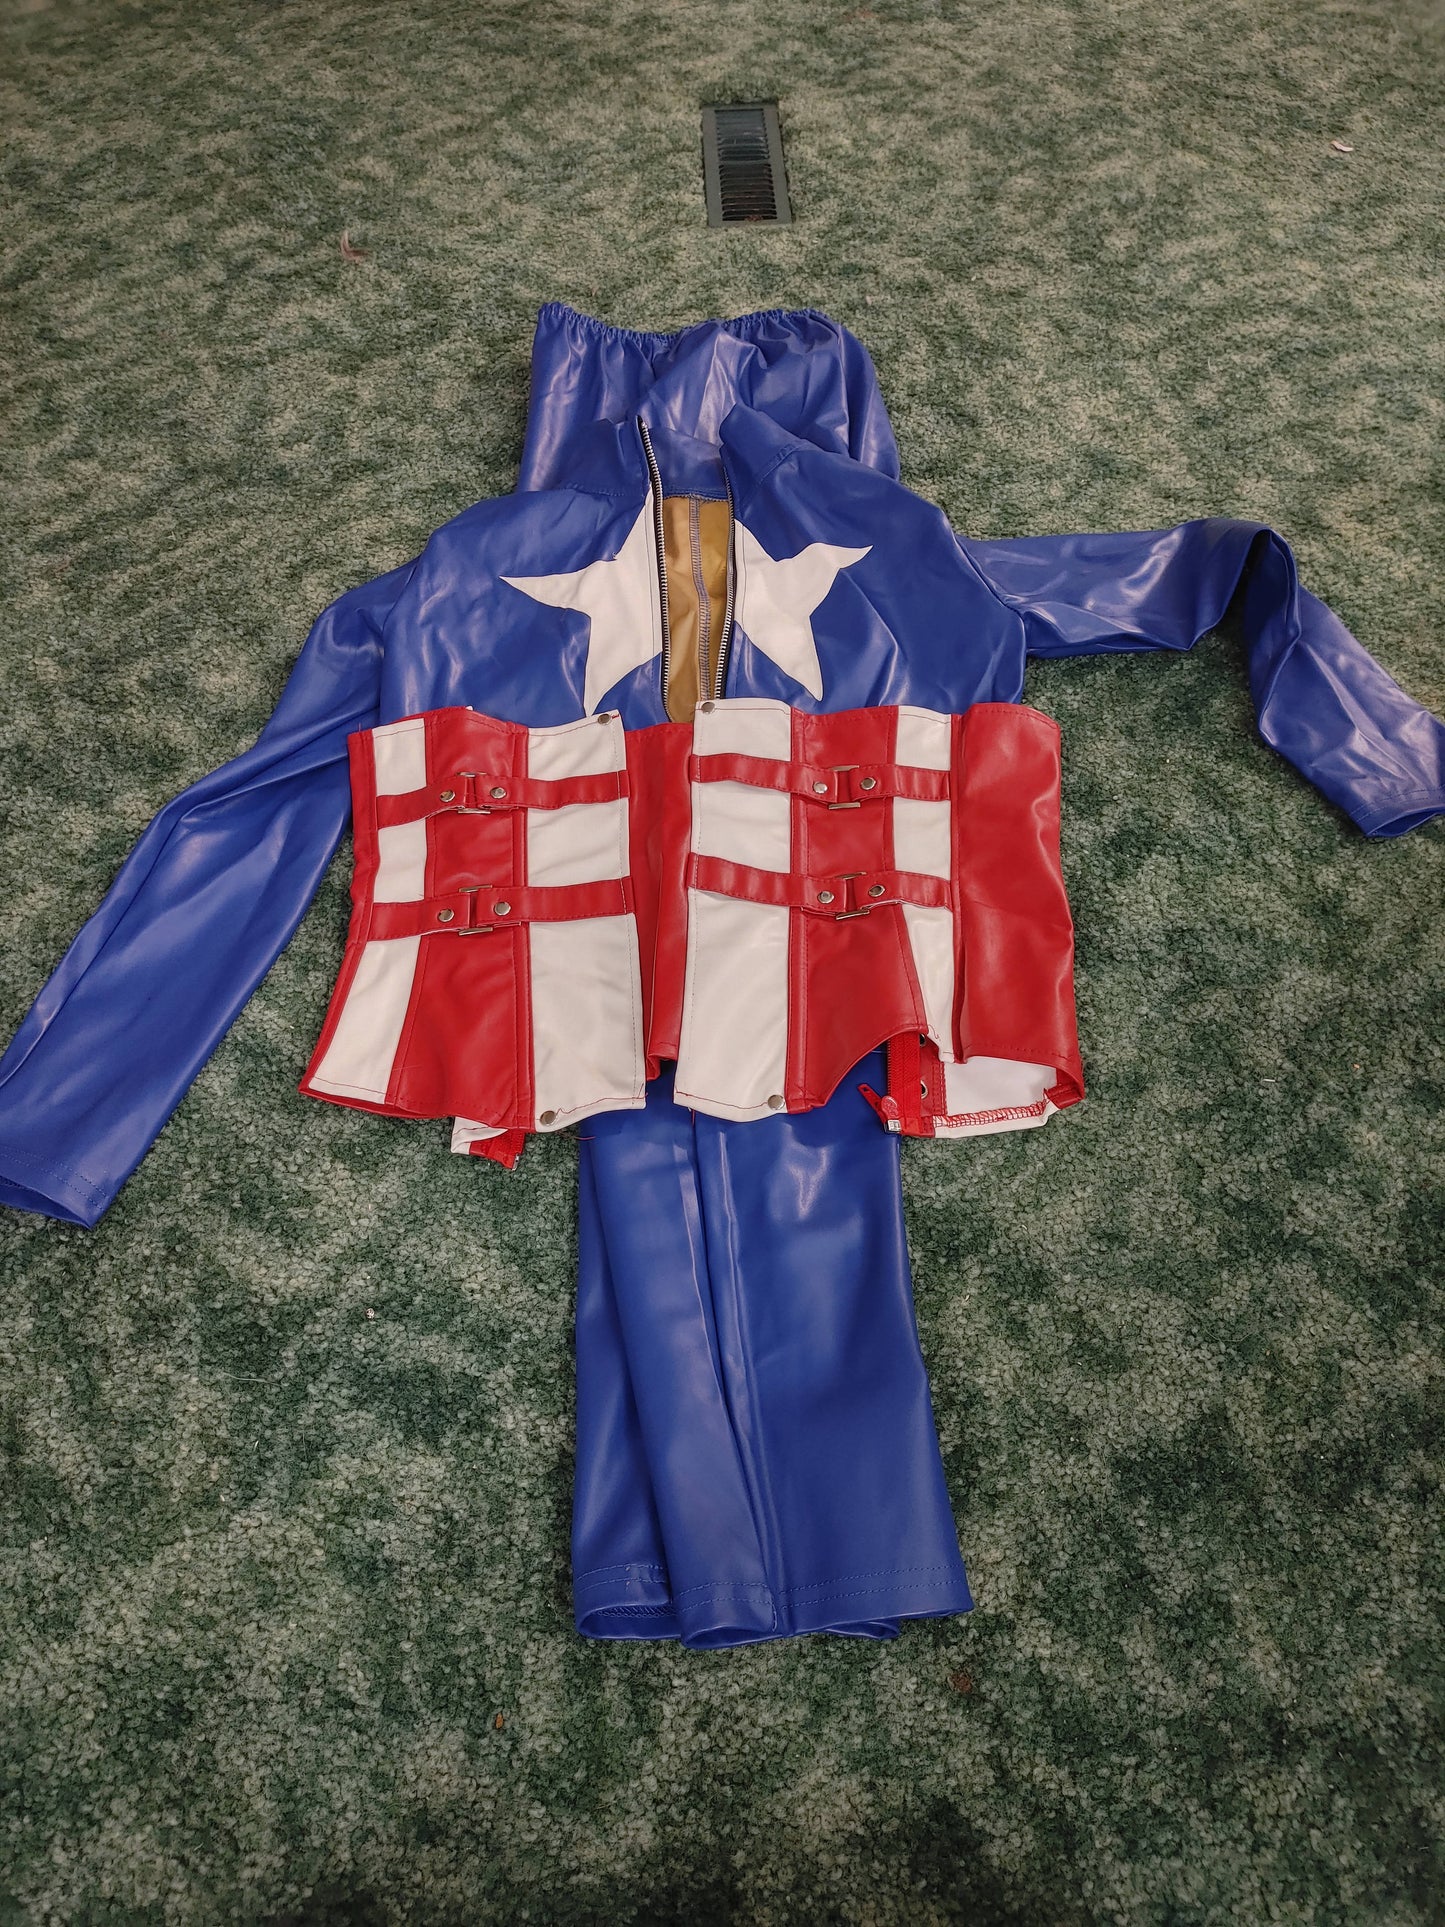 Female Captain America inspired costume